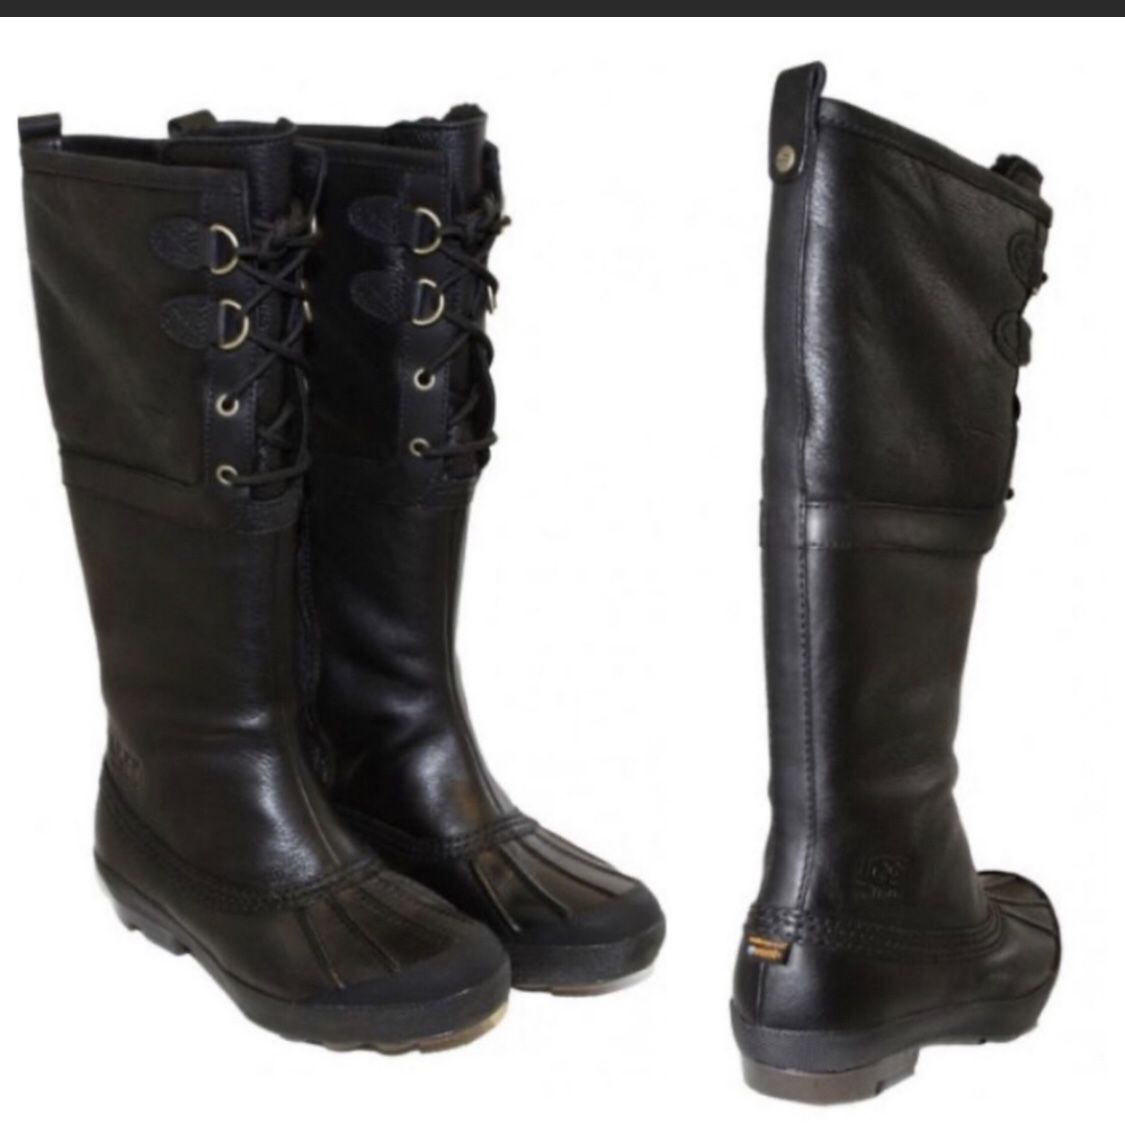 Ugg Becloud Waterproof Black Tall Boots 8